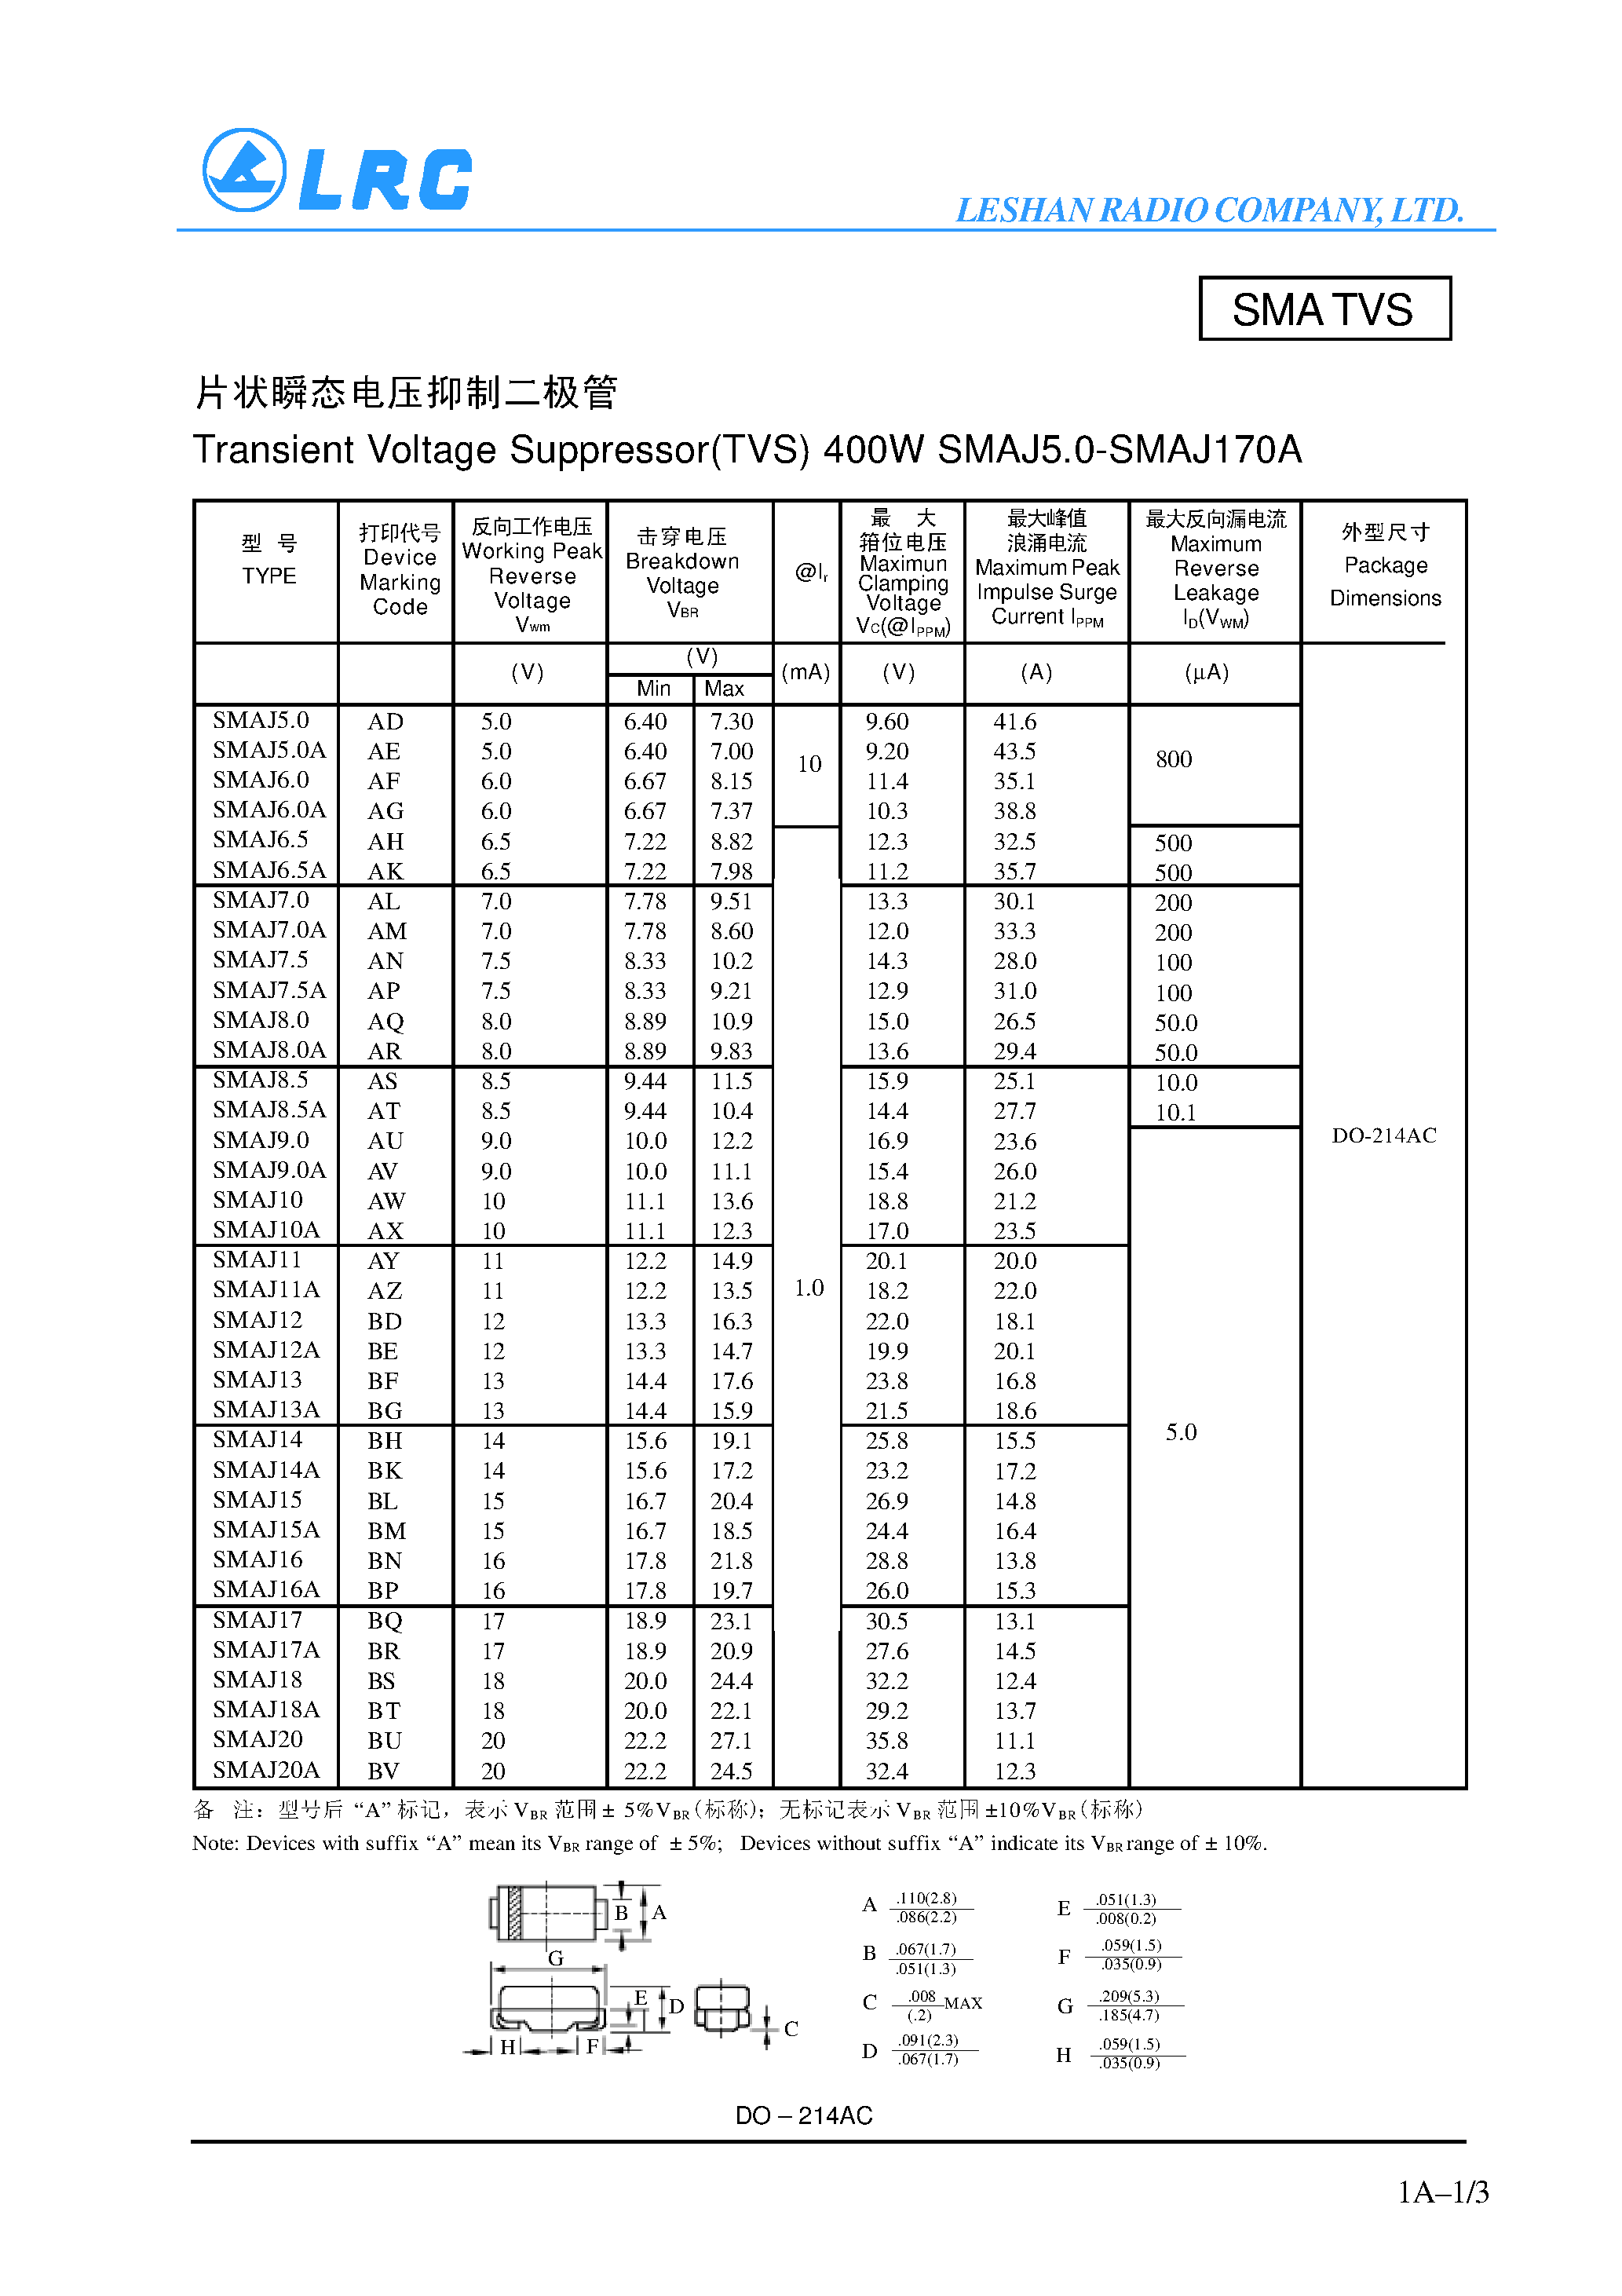 Datasheet 400WSMAJ5.0 - Transient Voltage Suppressor(TVS)400W SMAJ5.0-SMAJ170A page 1